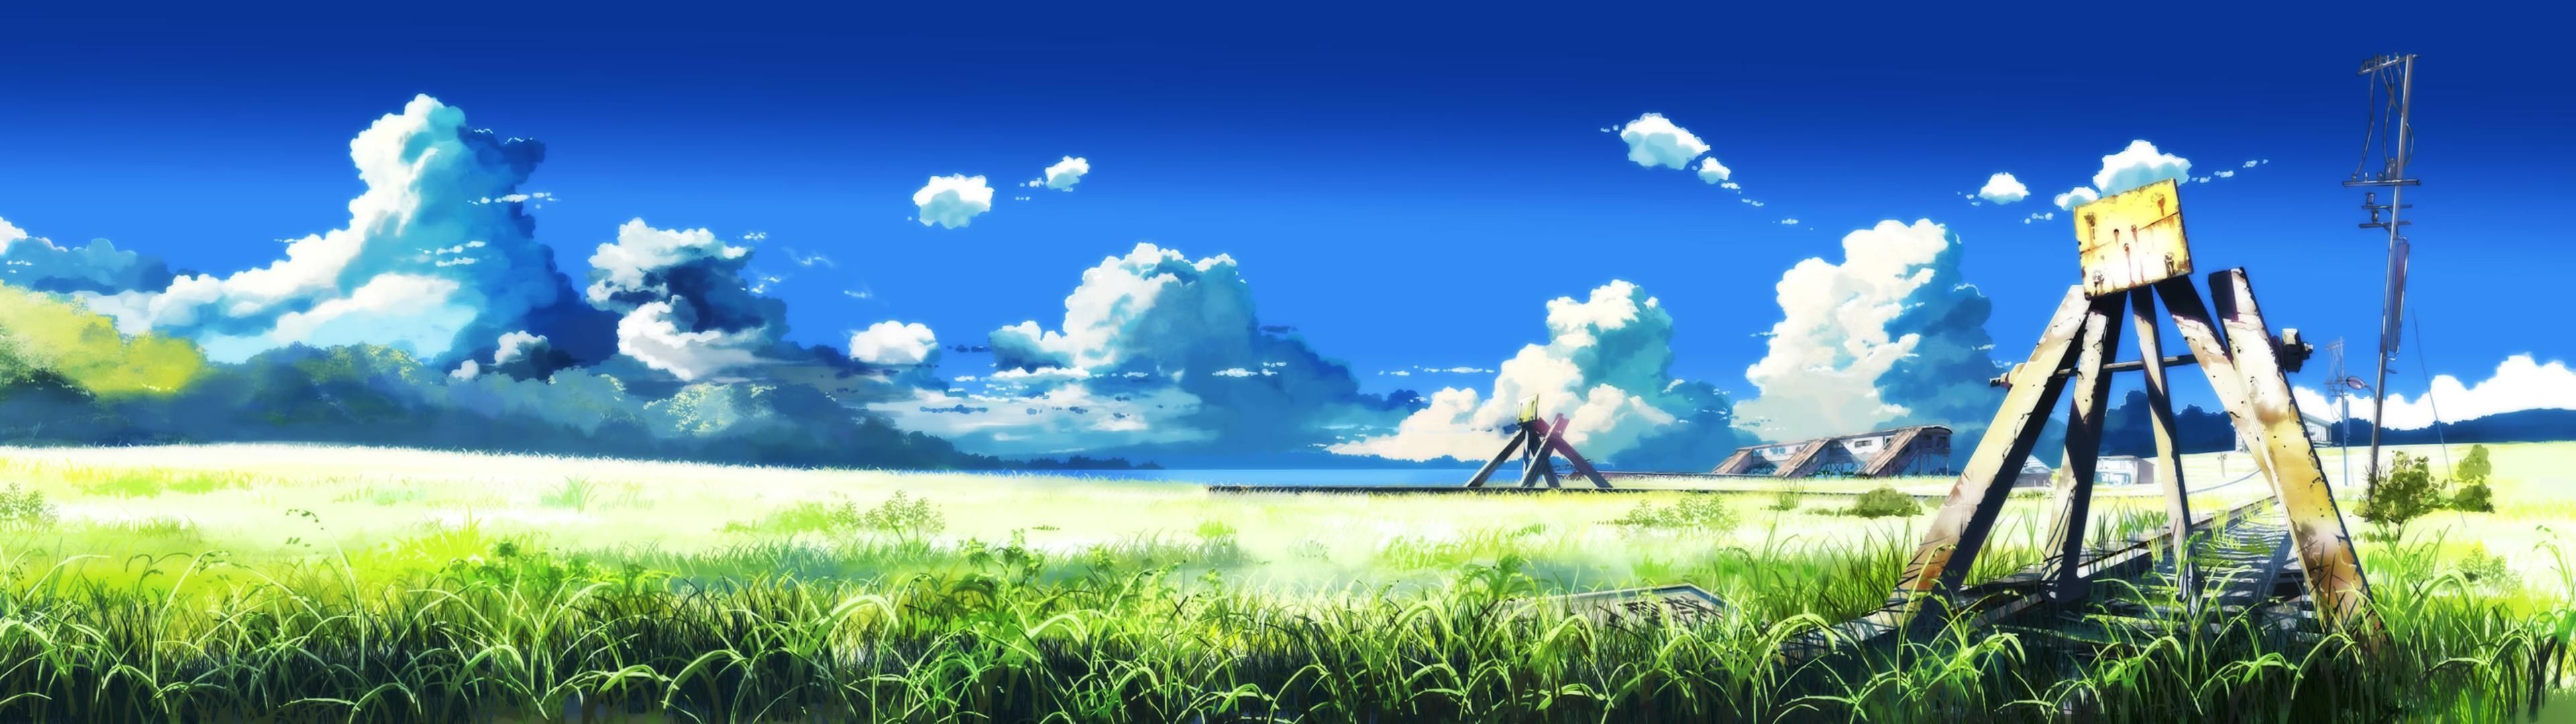 best anime home screen wallpaper